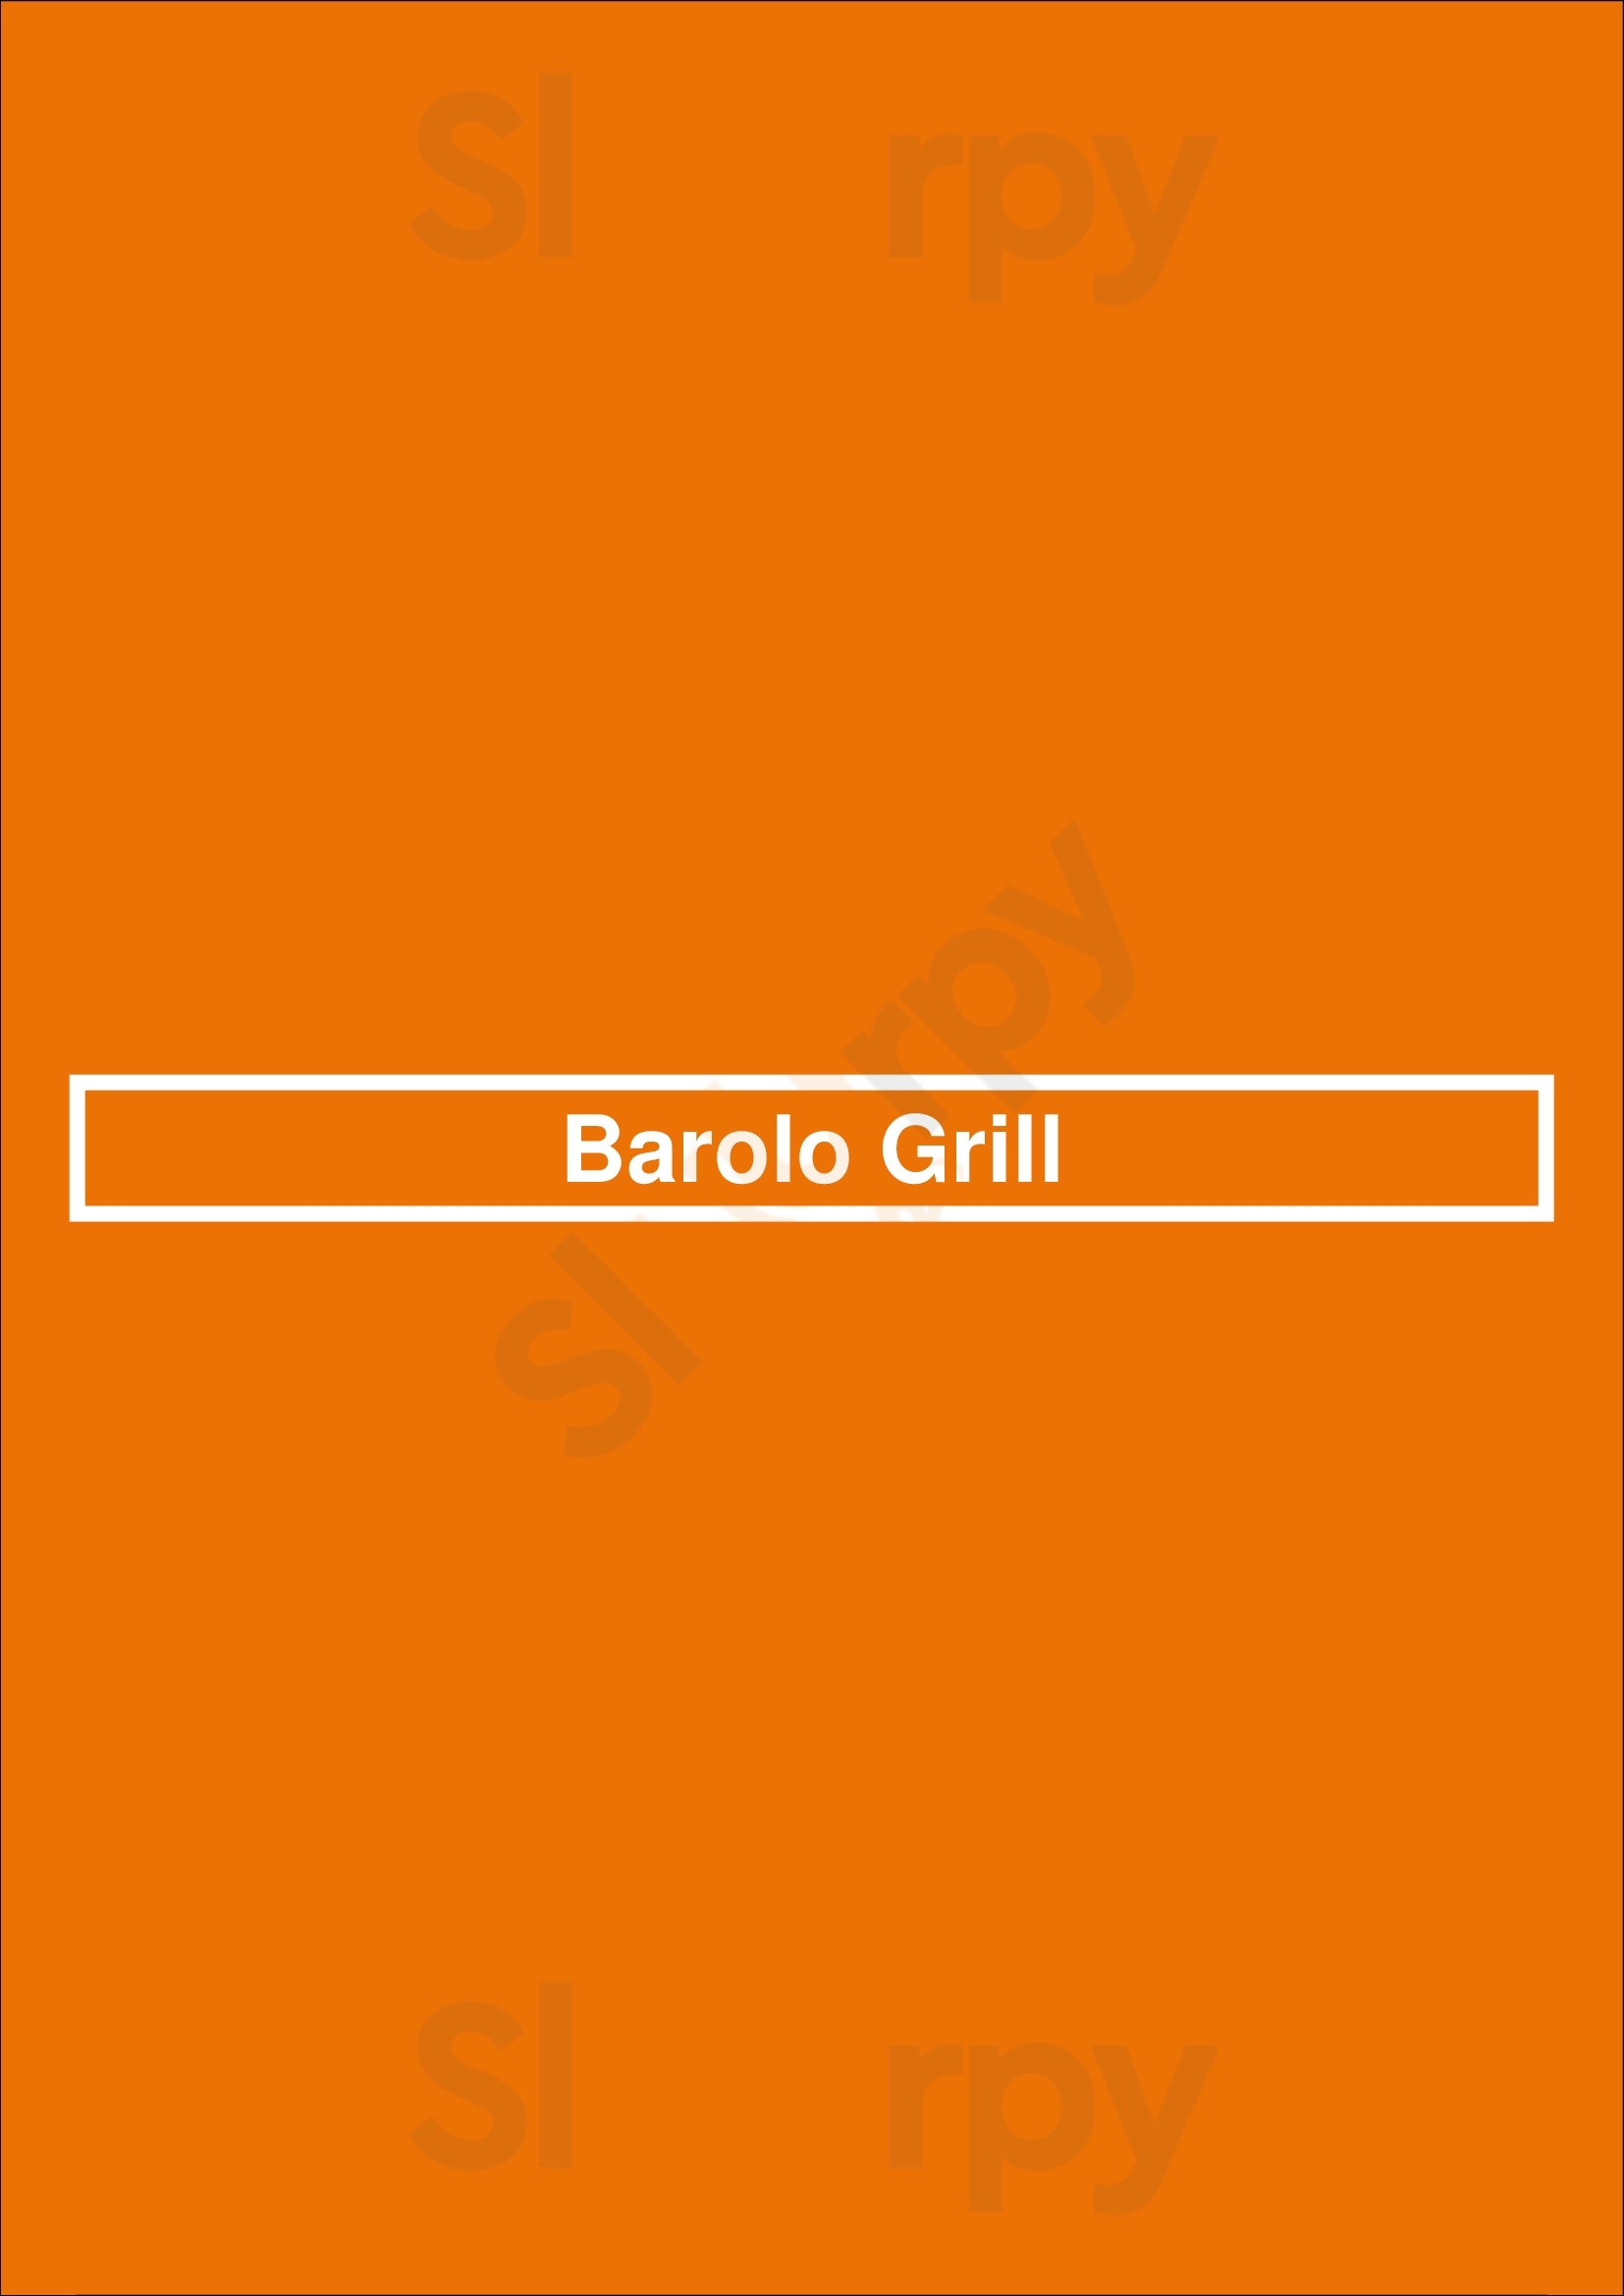 Barolo Grill Denver Menu - 1